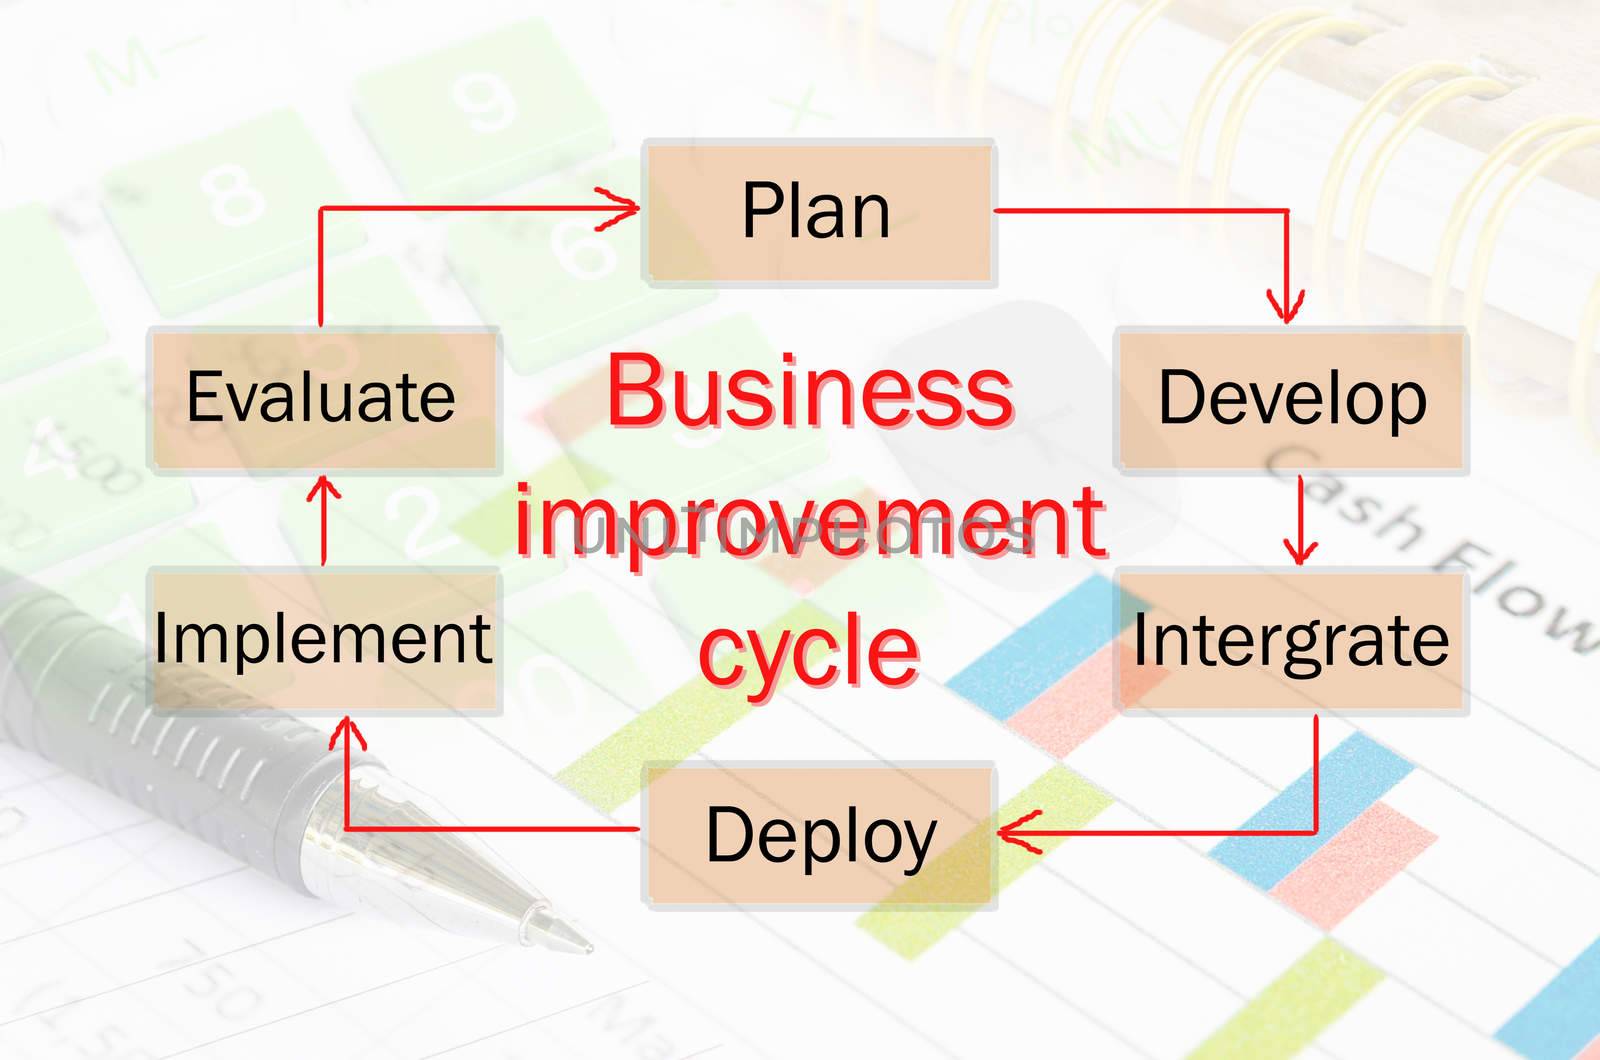 Business improvement cycle process. by Gamjai